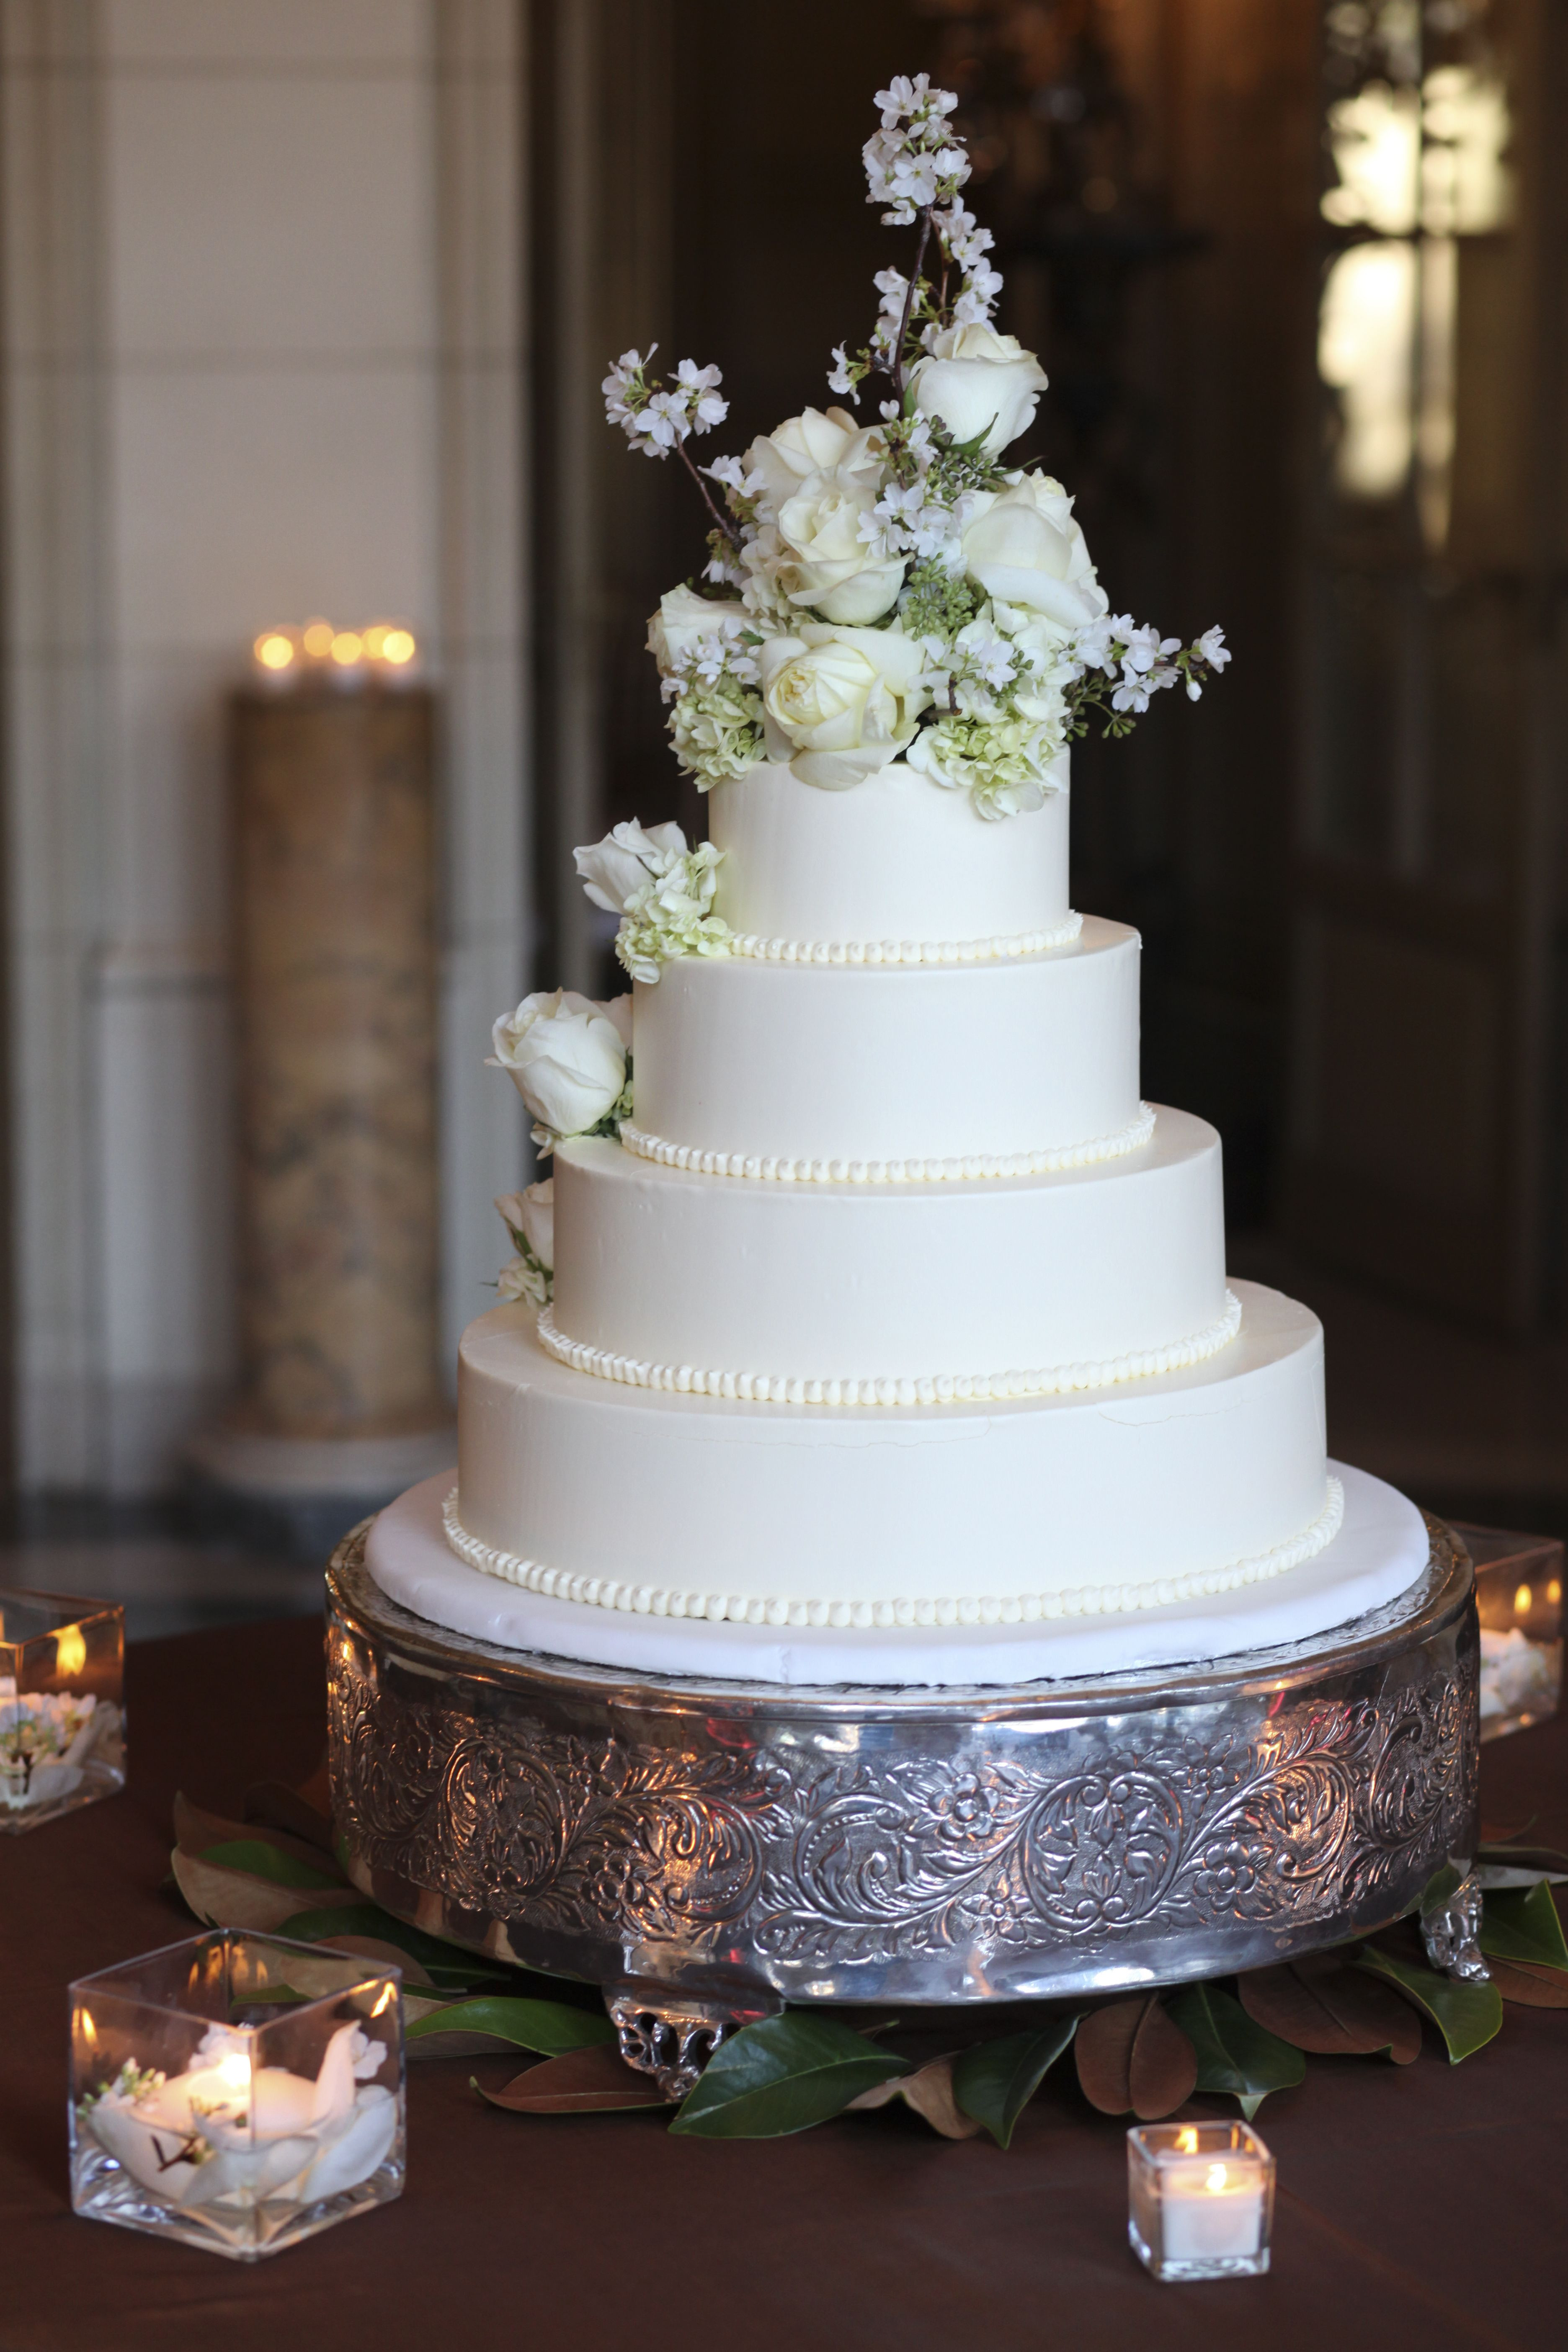 4 Tier Wedding Cakes
 white roses on buttercream 4 tier wedding cake w